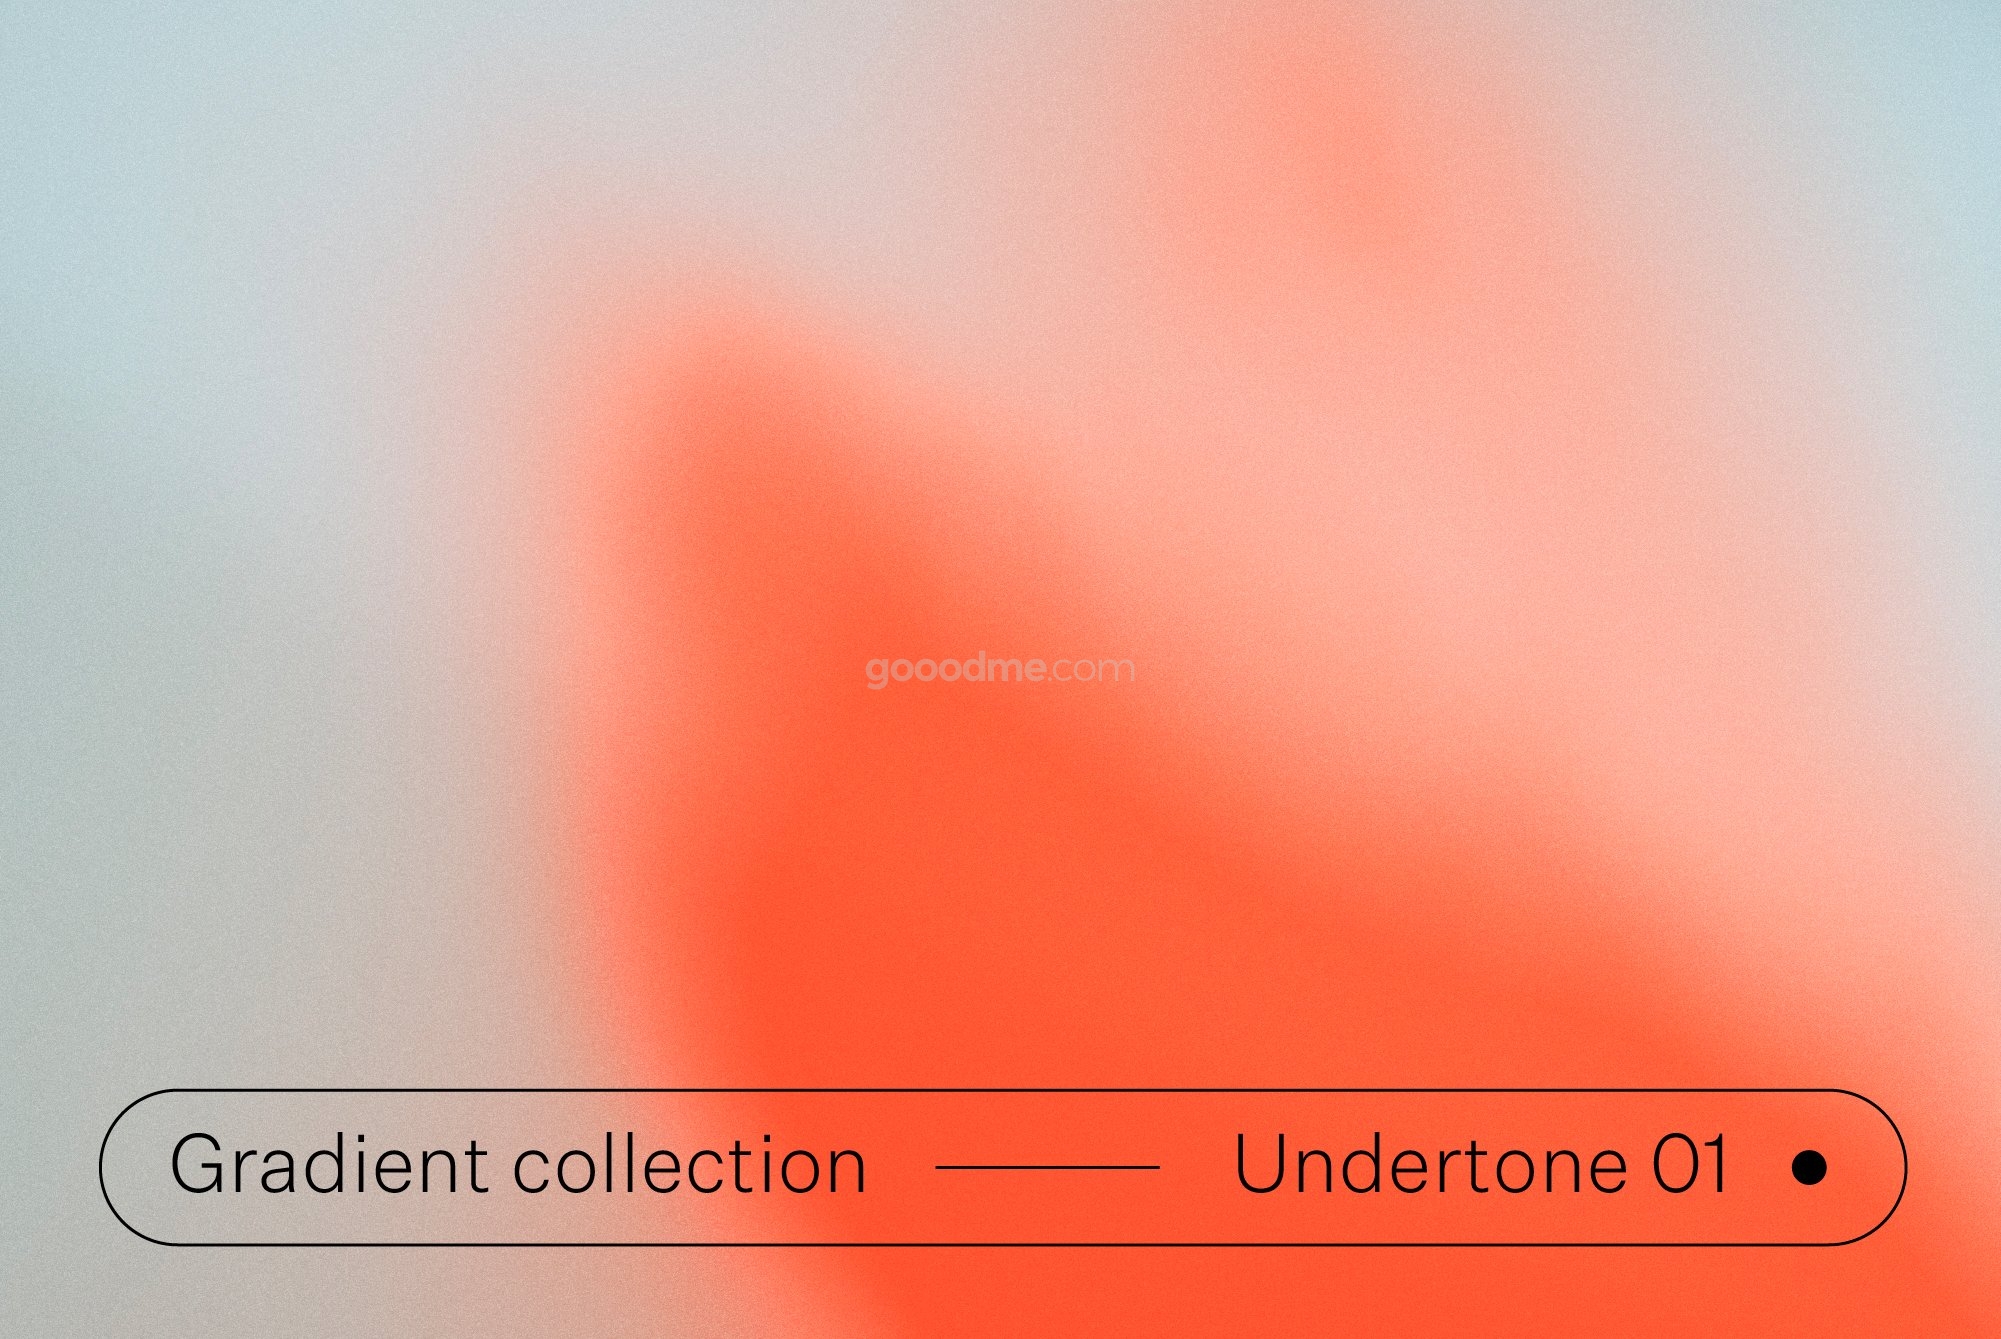 738 12款酸性噪点渐变背景素材Undertone 01 Gradient Collection